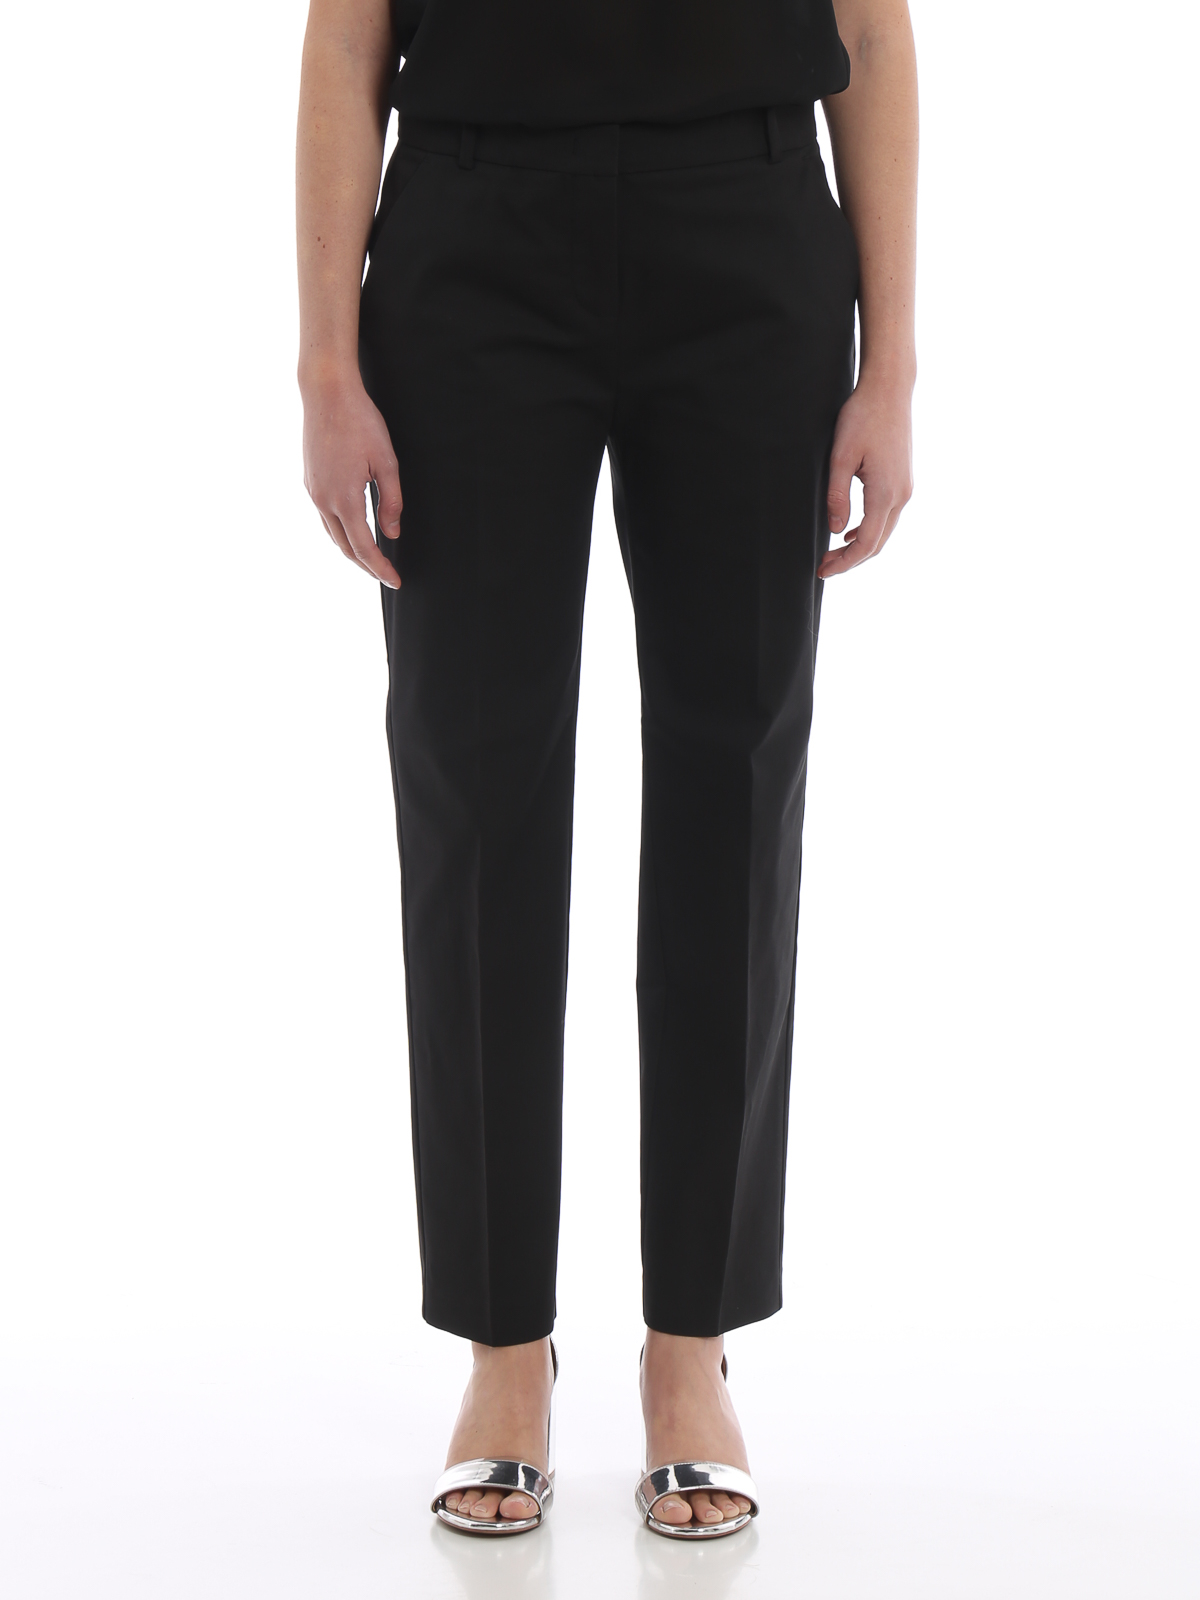 Black Trousers for Women - Buy Stylish Black Trousers Online | Libas